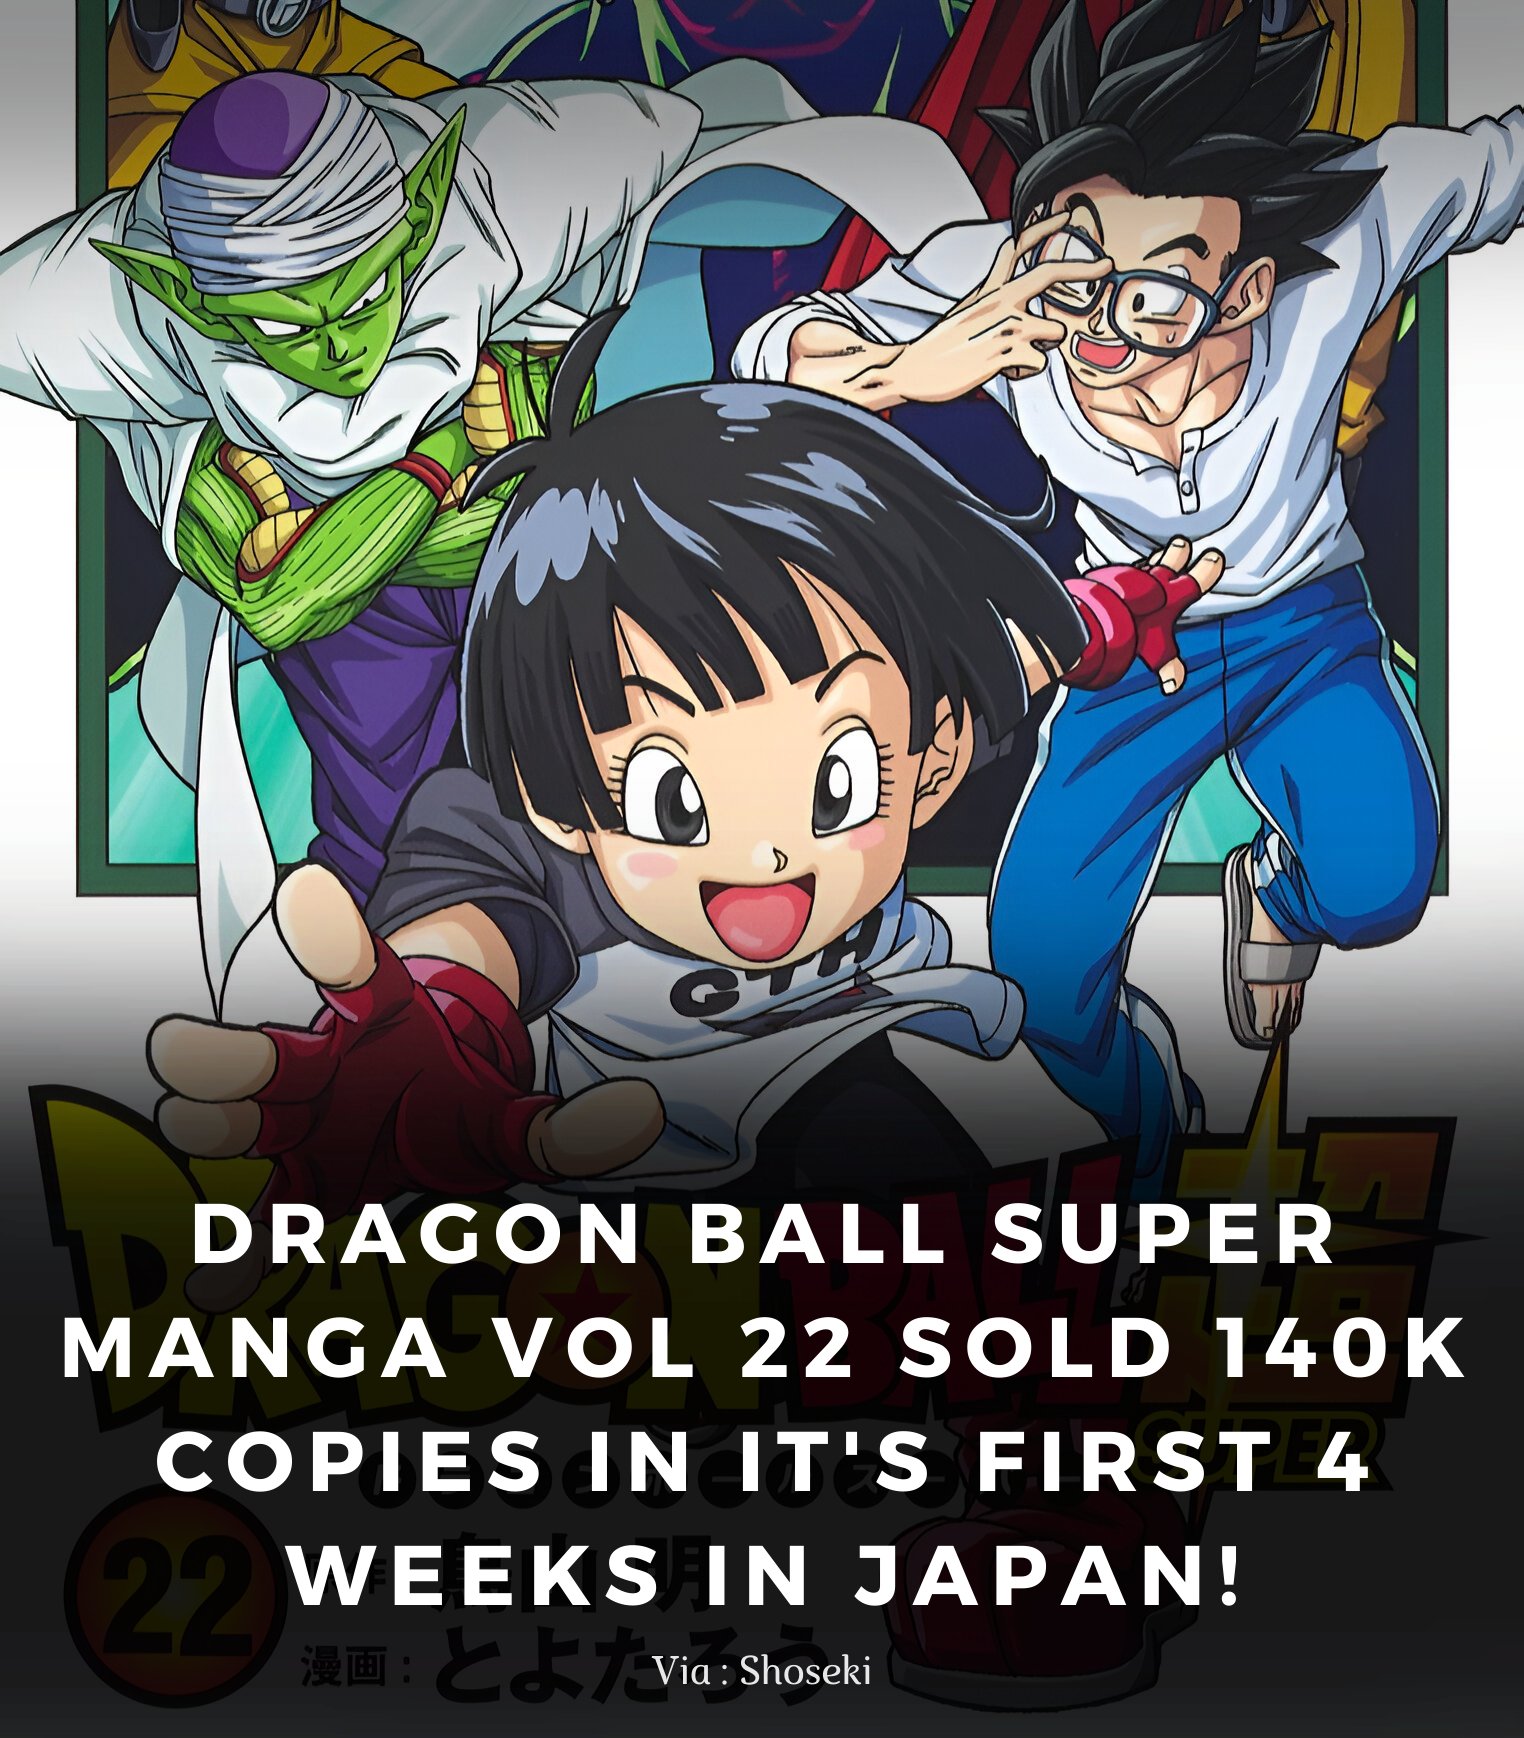 [Novidade/Notícia] Vendas do manga de Dragon Ball super volume 22 GDMeHDwW8AAzSZl?format=jpg&name=large